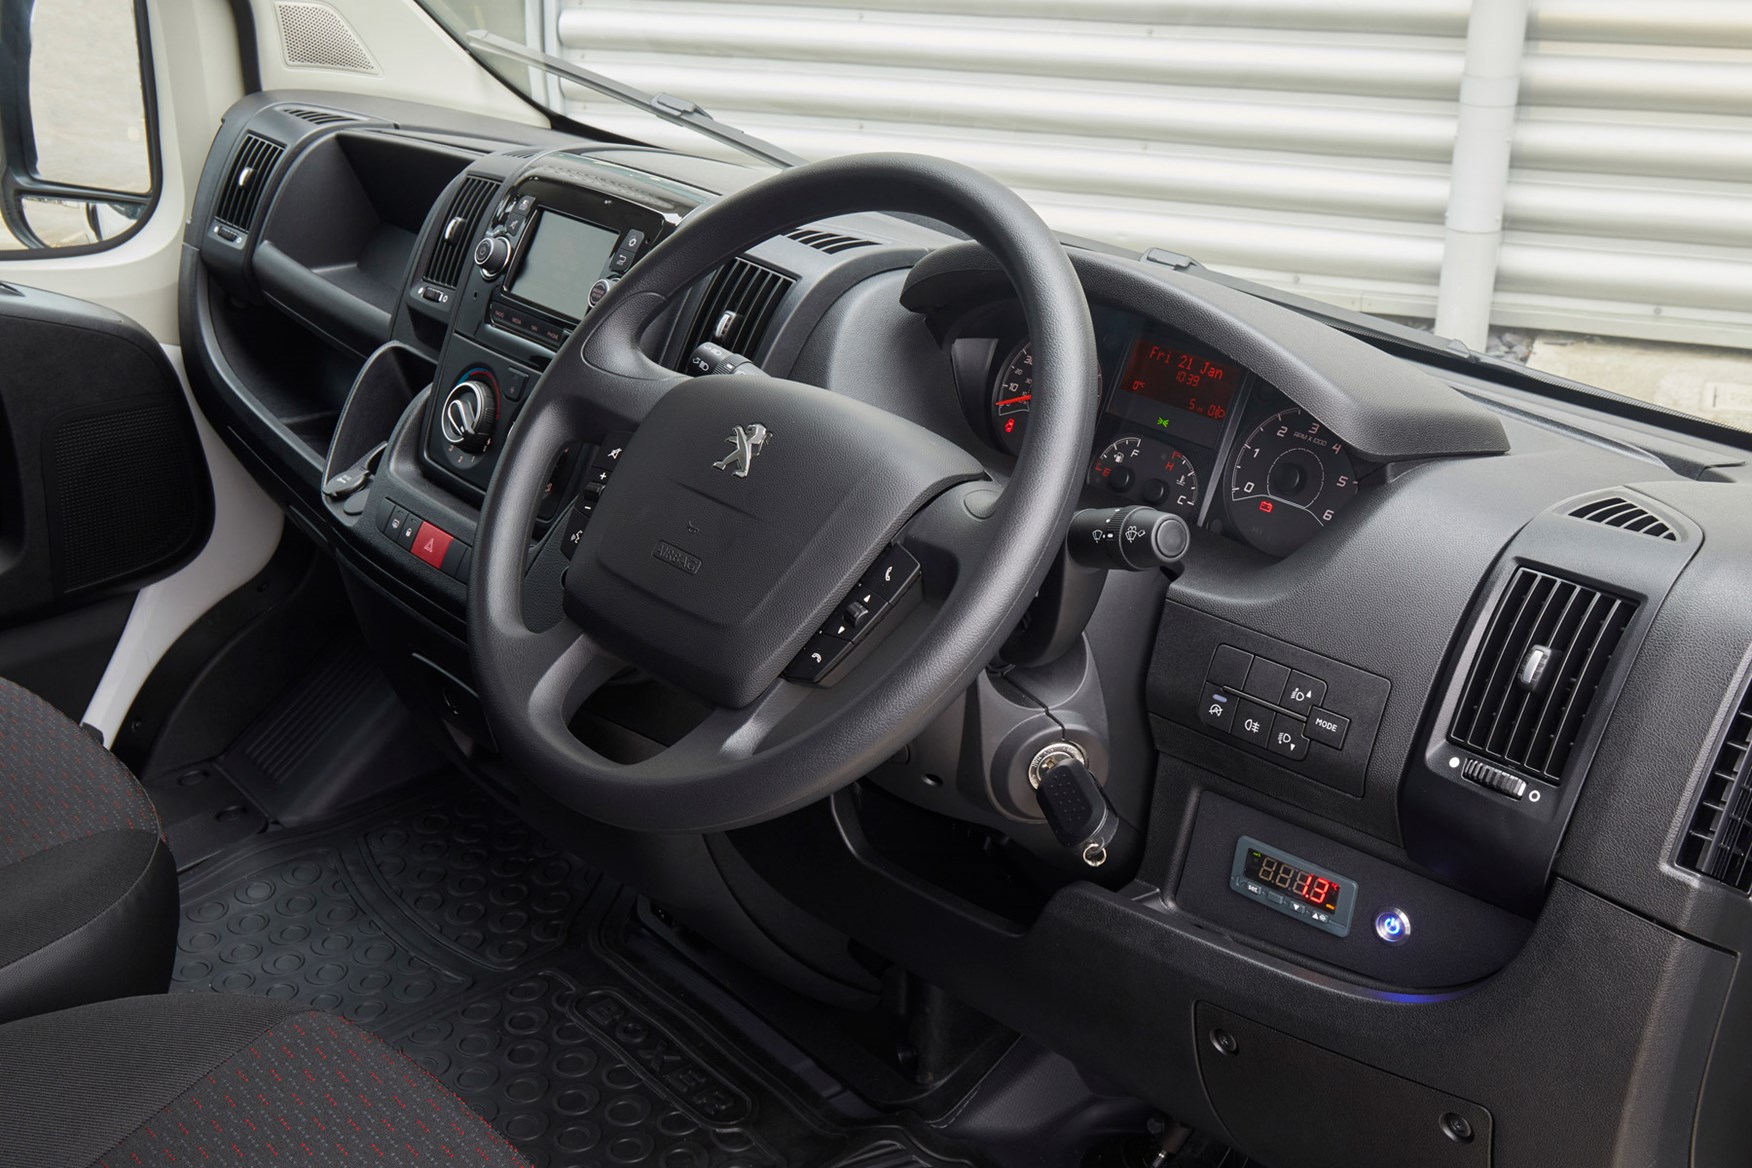 Peugeot e-Boxer electric van review - cab interior, steering wheel